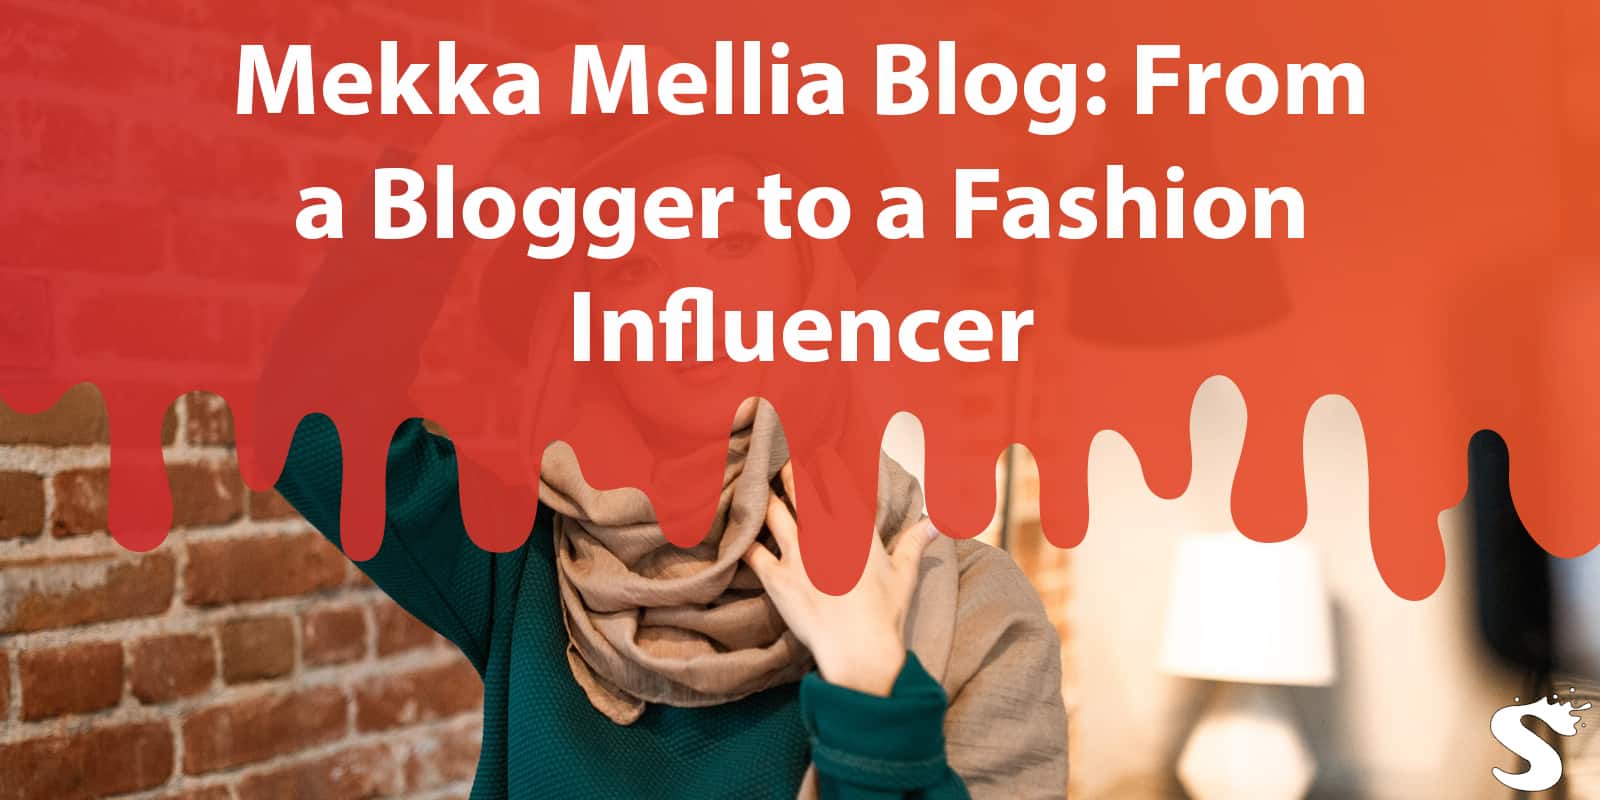 Mekka Mellia Blog: From a Blogger to a Fashion Influencer